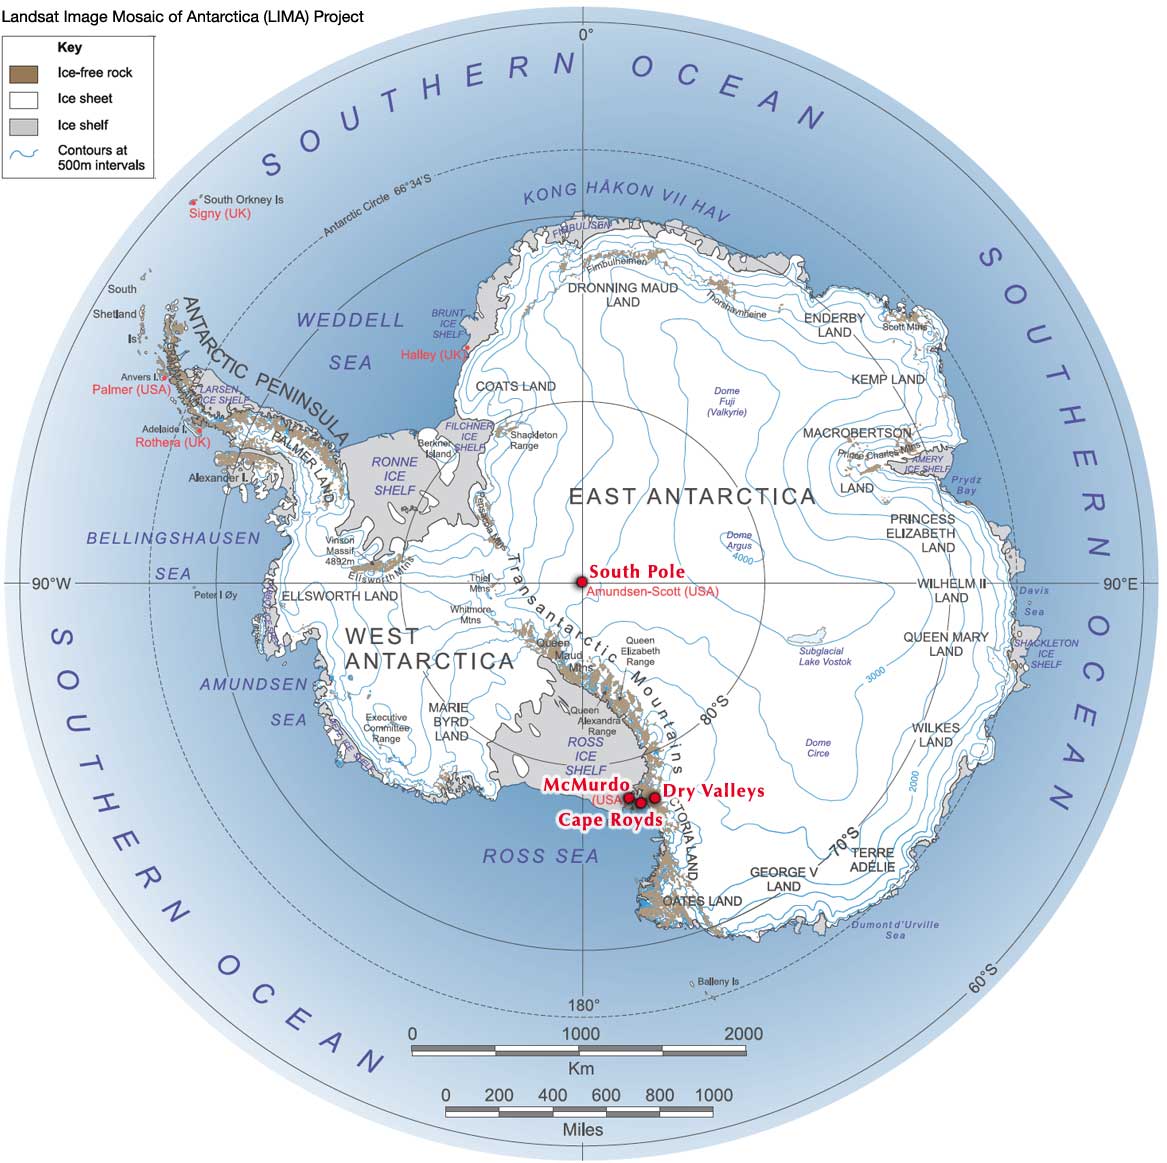 http://icestories.exploratorium.edu/dispatches/wp-content/uploads/assets/maps/antarctica_chasing.jpg